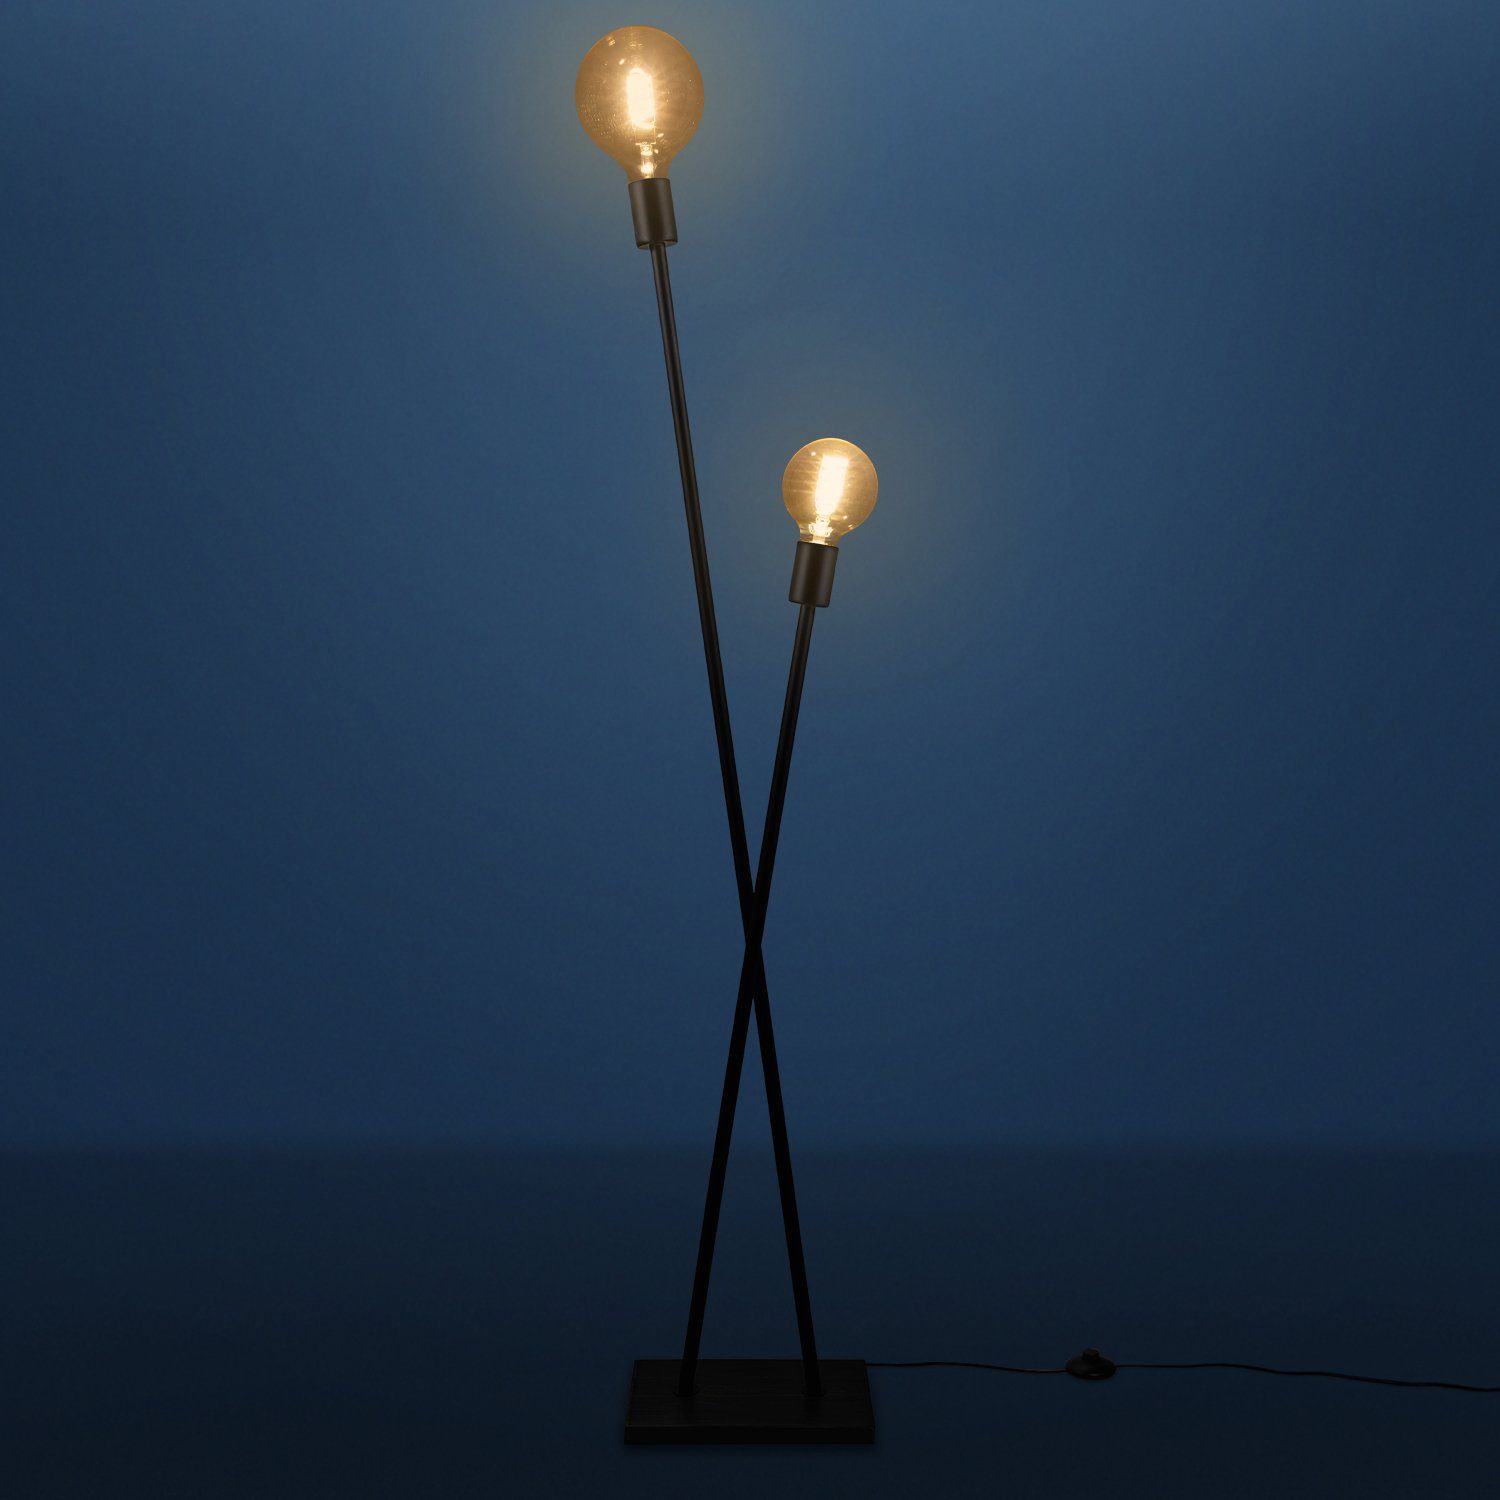 Paco Home Stehlampe LED IKS, E27 Industrial Lampe Stehlampe Leuchtmittel, Wohnzimmer Design ohne Retro Vintage